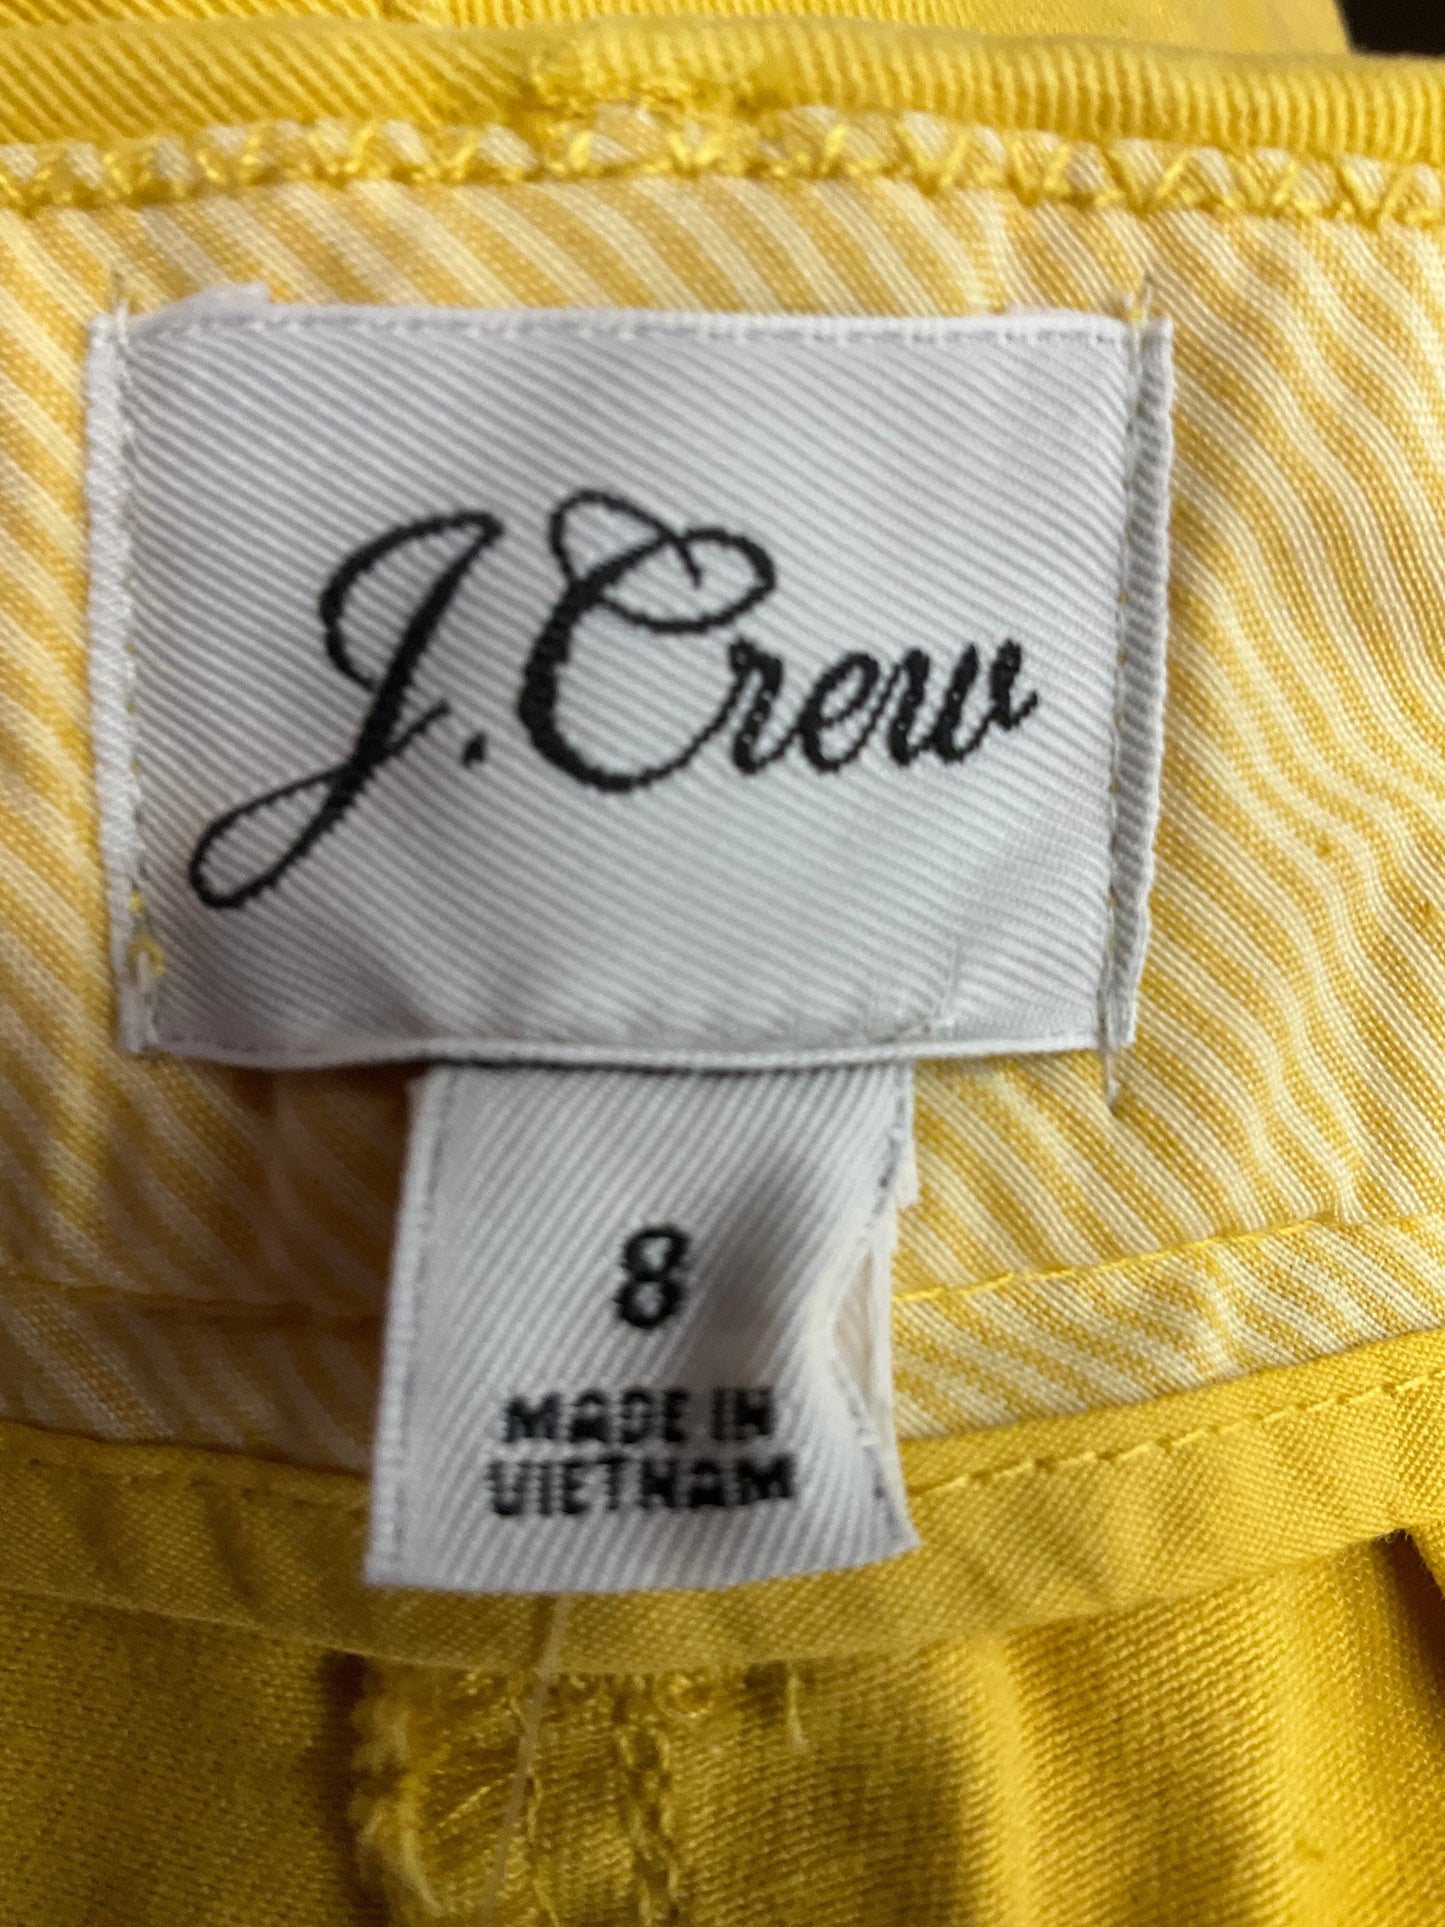 Yellow Shorts J. Crew, Size 8